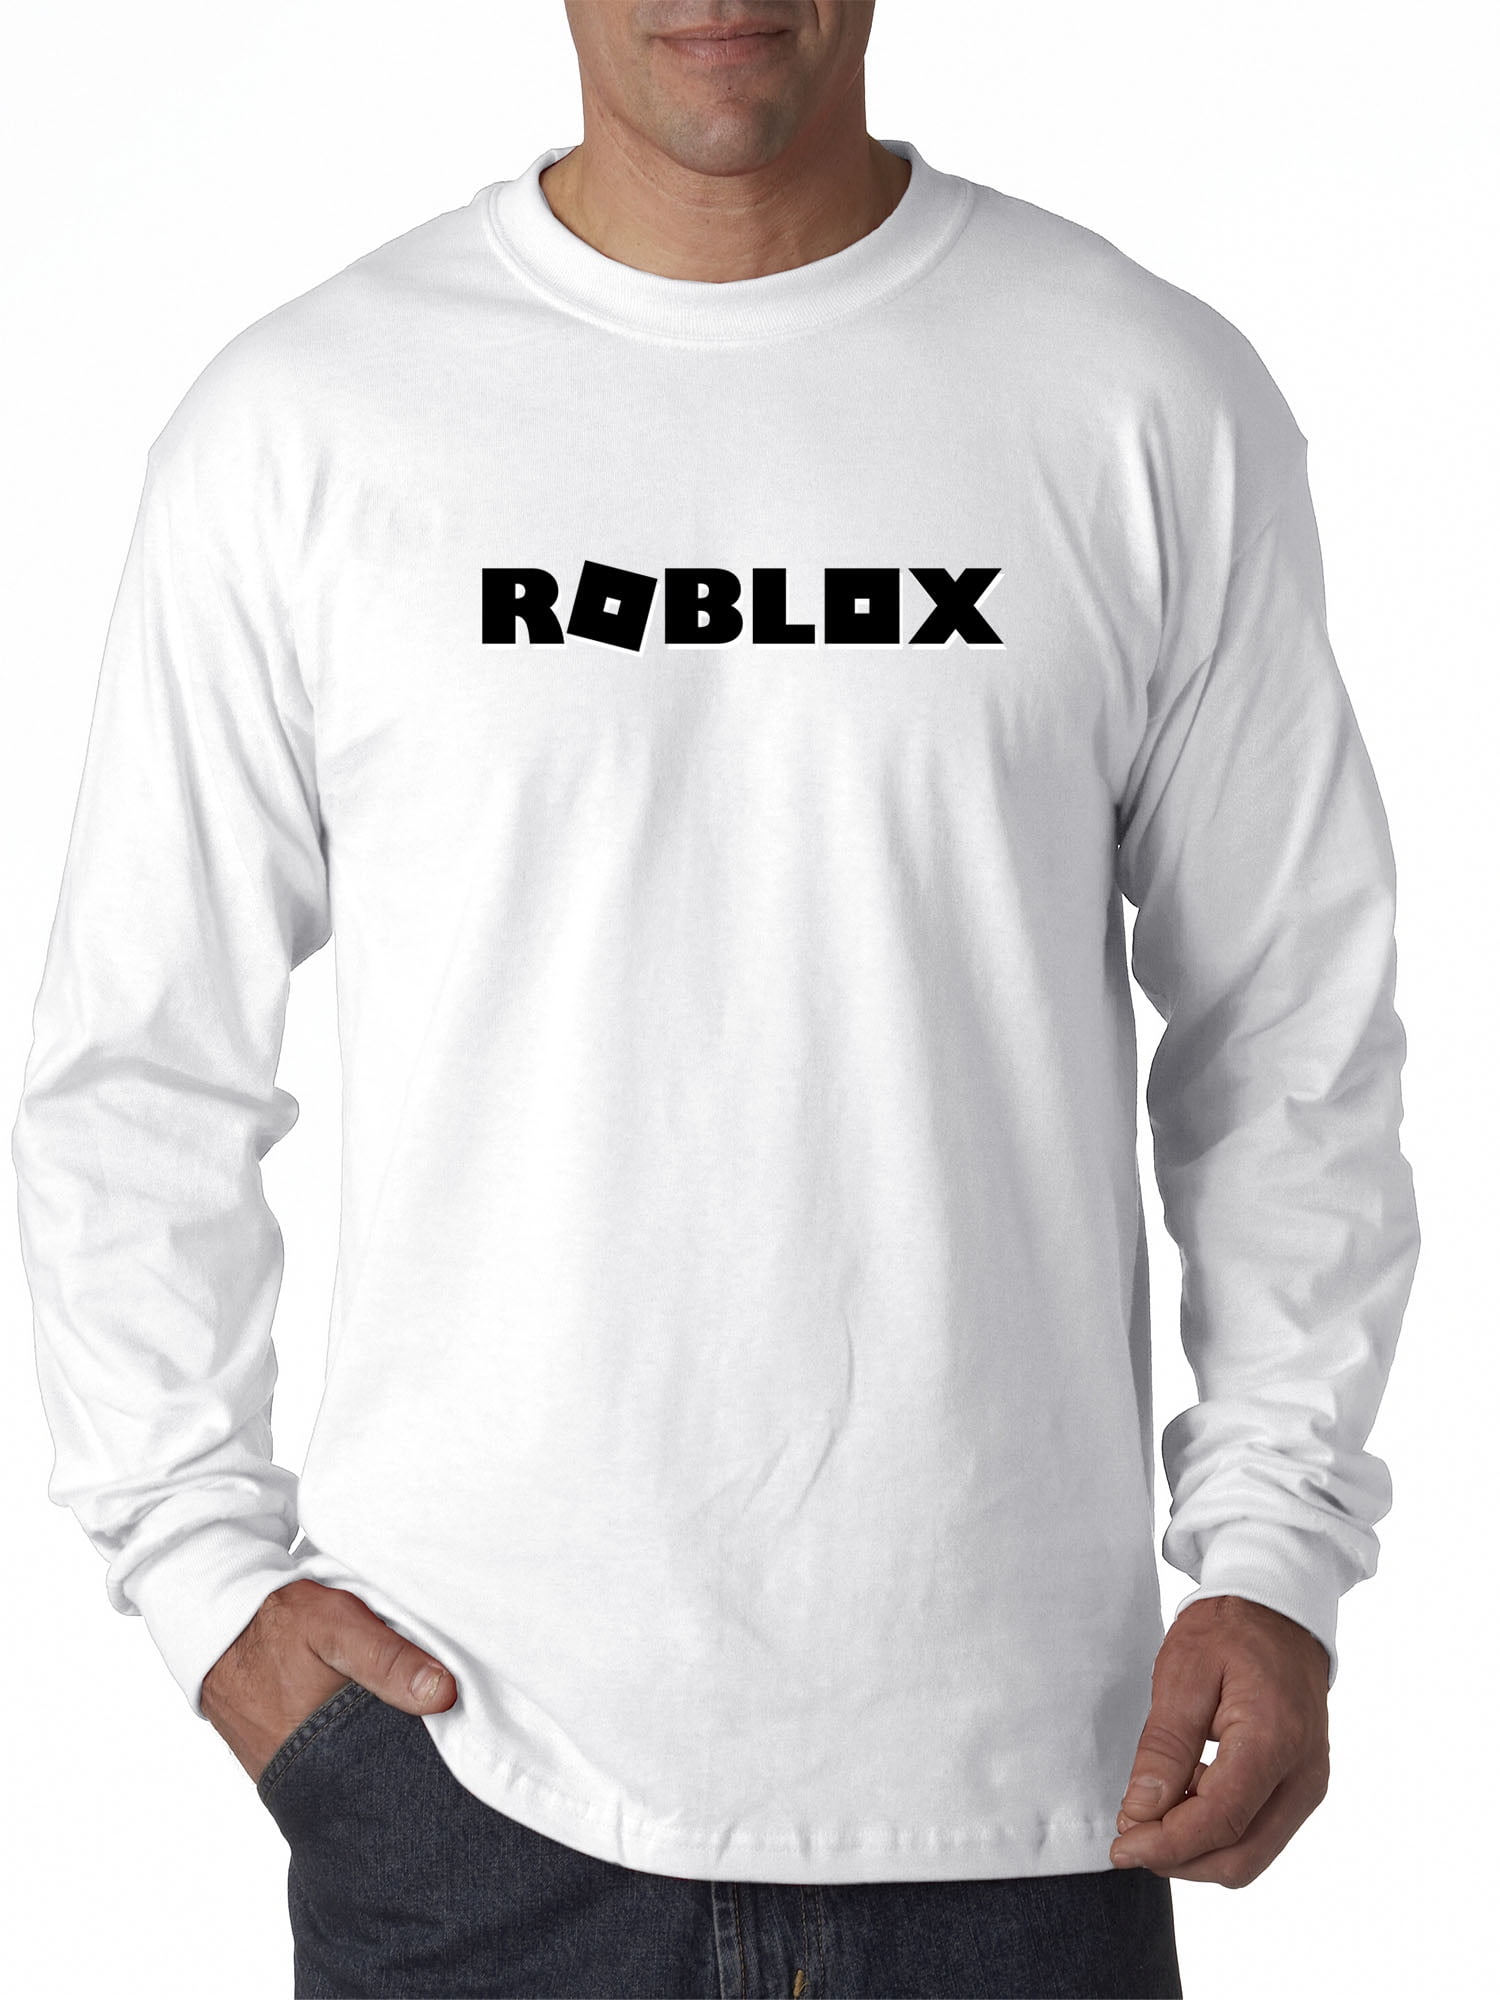 Trendy Usa Trendy Usa 1168 Unisex Long Sleeve T Shirt Roblox - girls roblox logo game short sleeve t shirt cotton tops tee